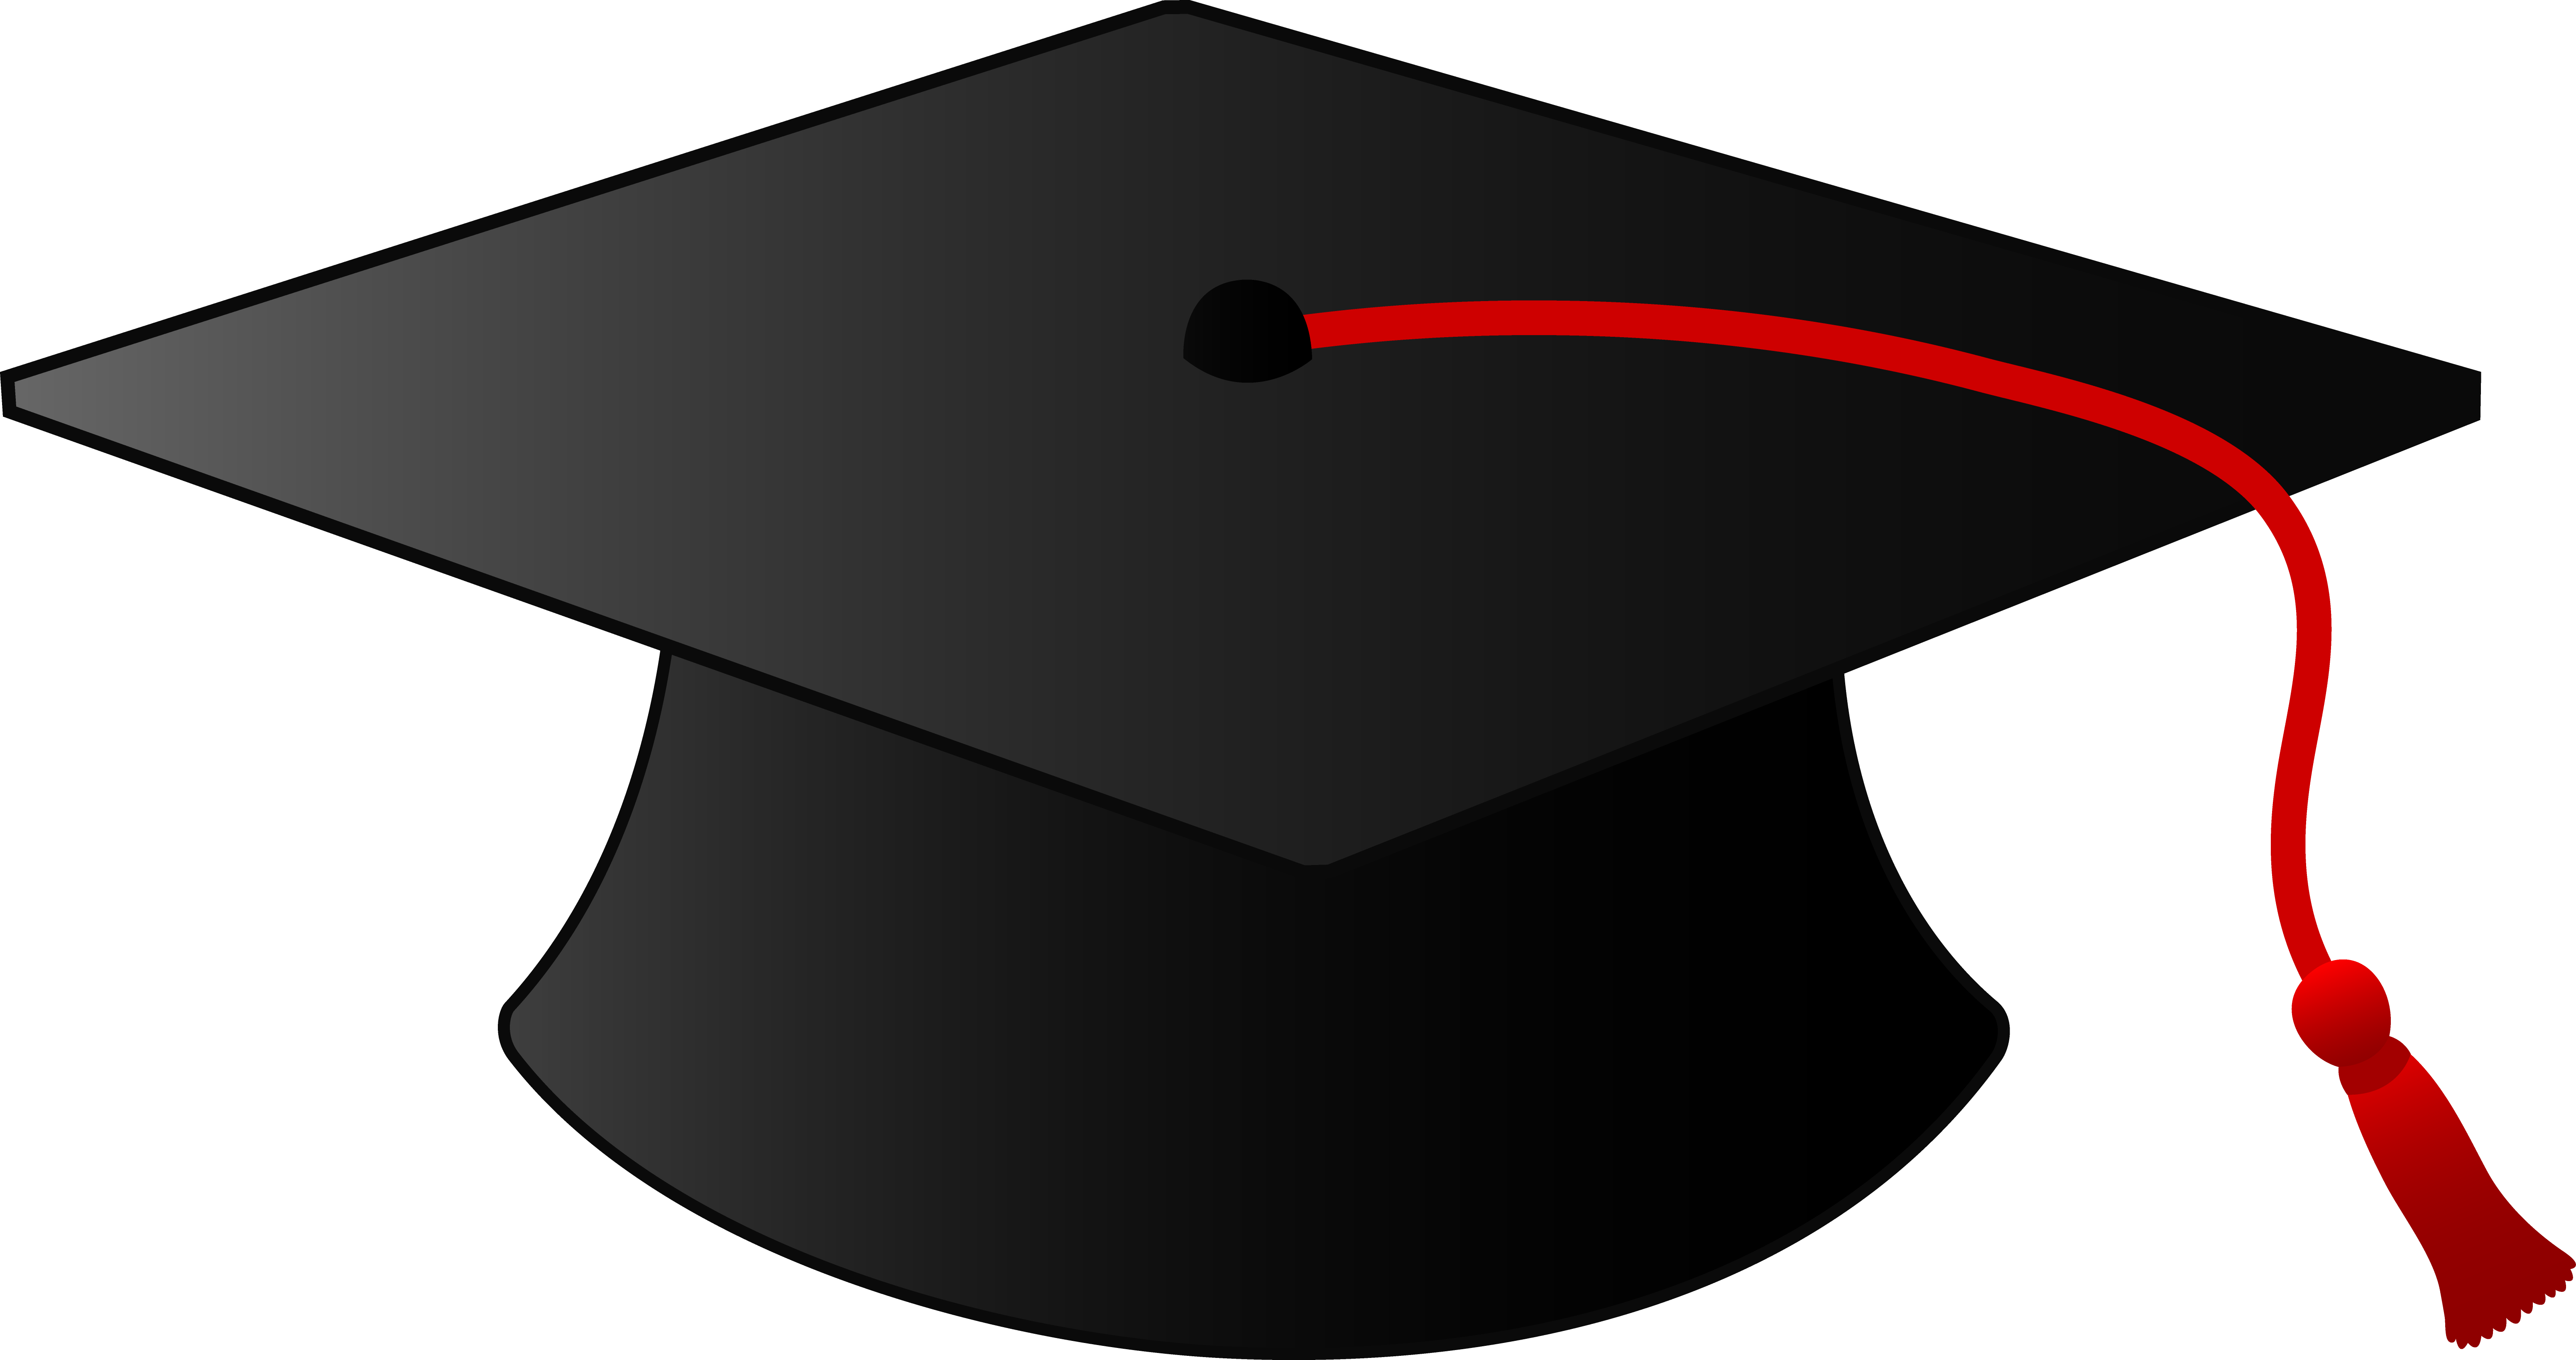 Graduation Hat Png | Free Download Clip Art | Free Clip Art | on ...